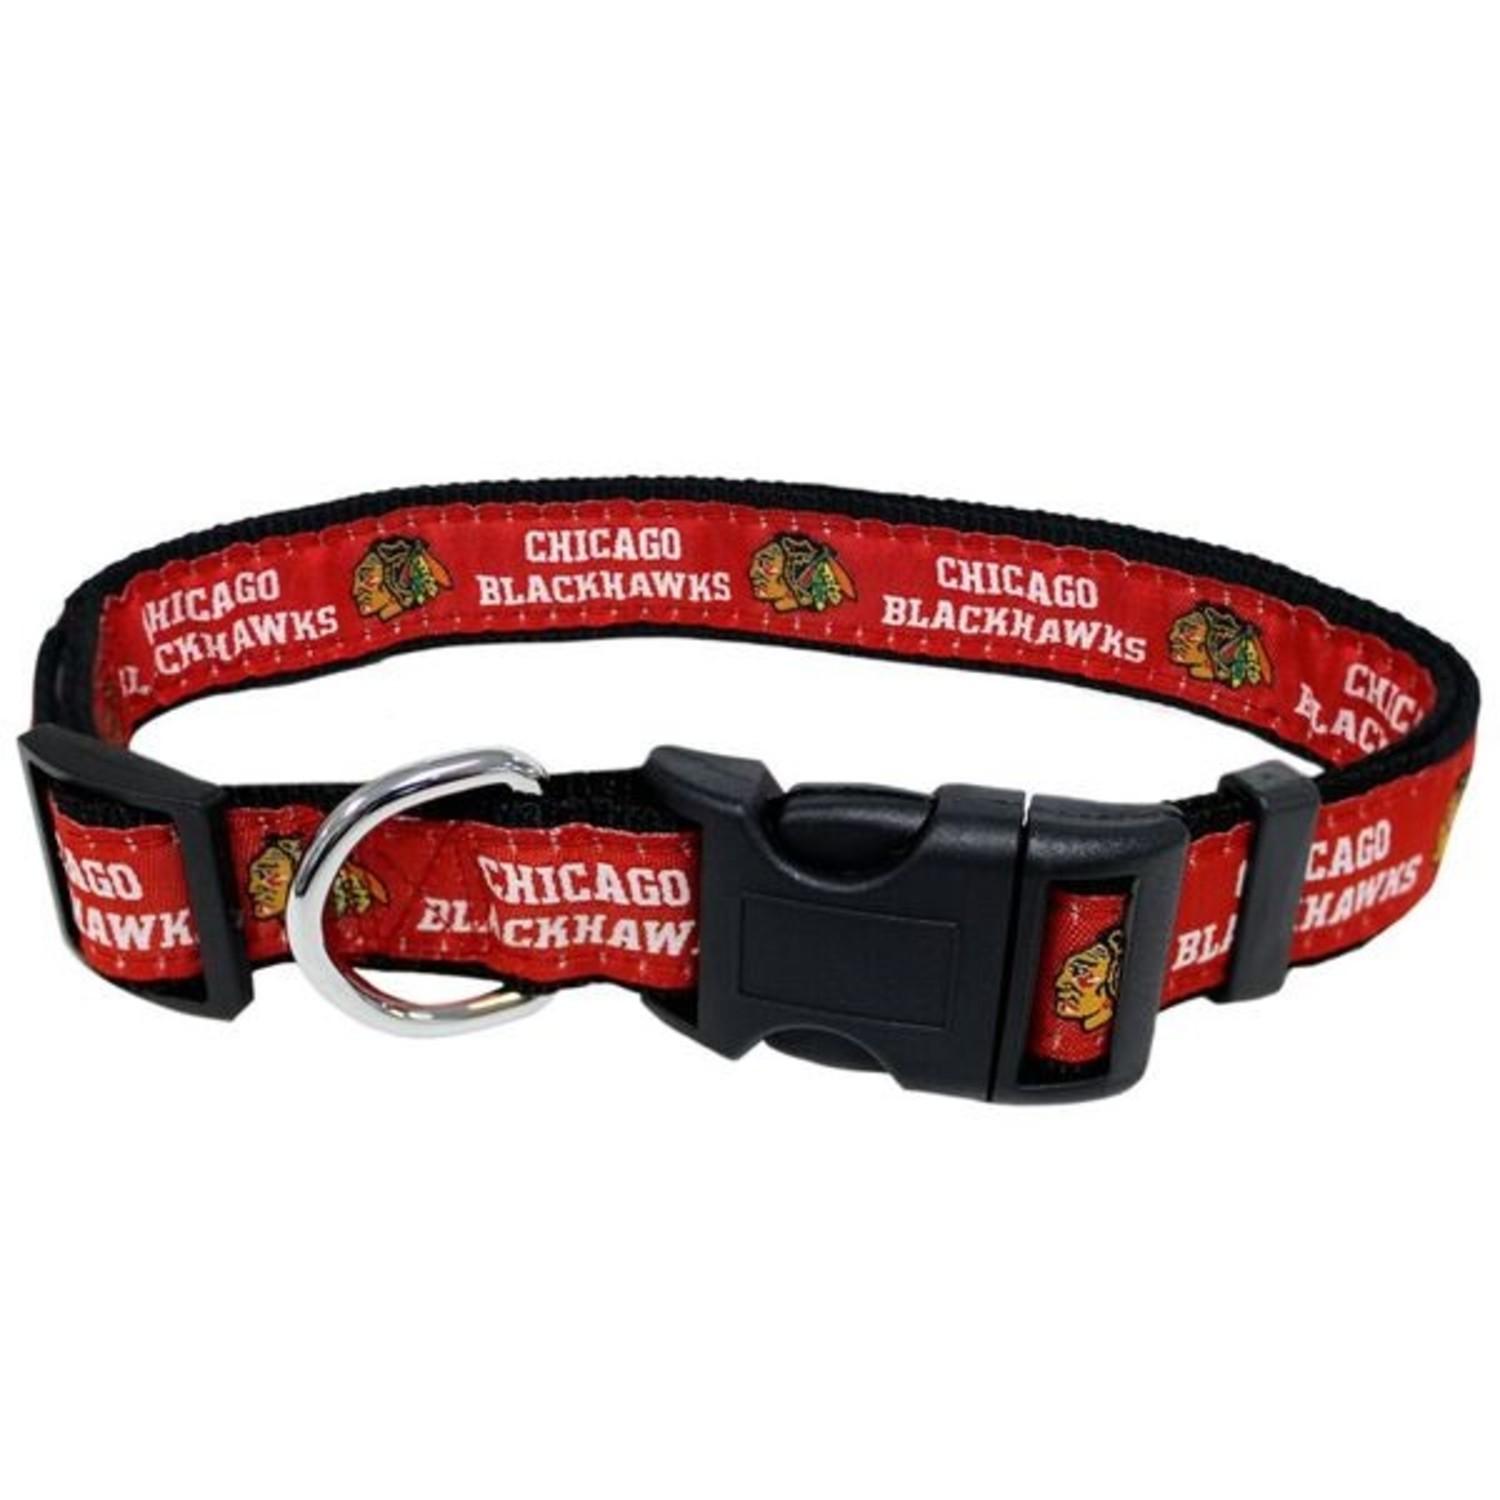 Chicago Blackhawks Officially Licensed Dog Collar - RIBBON